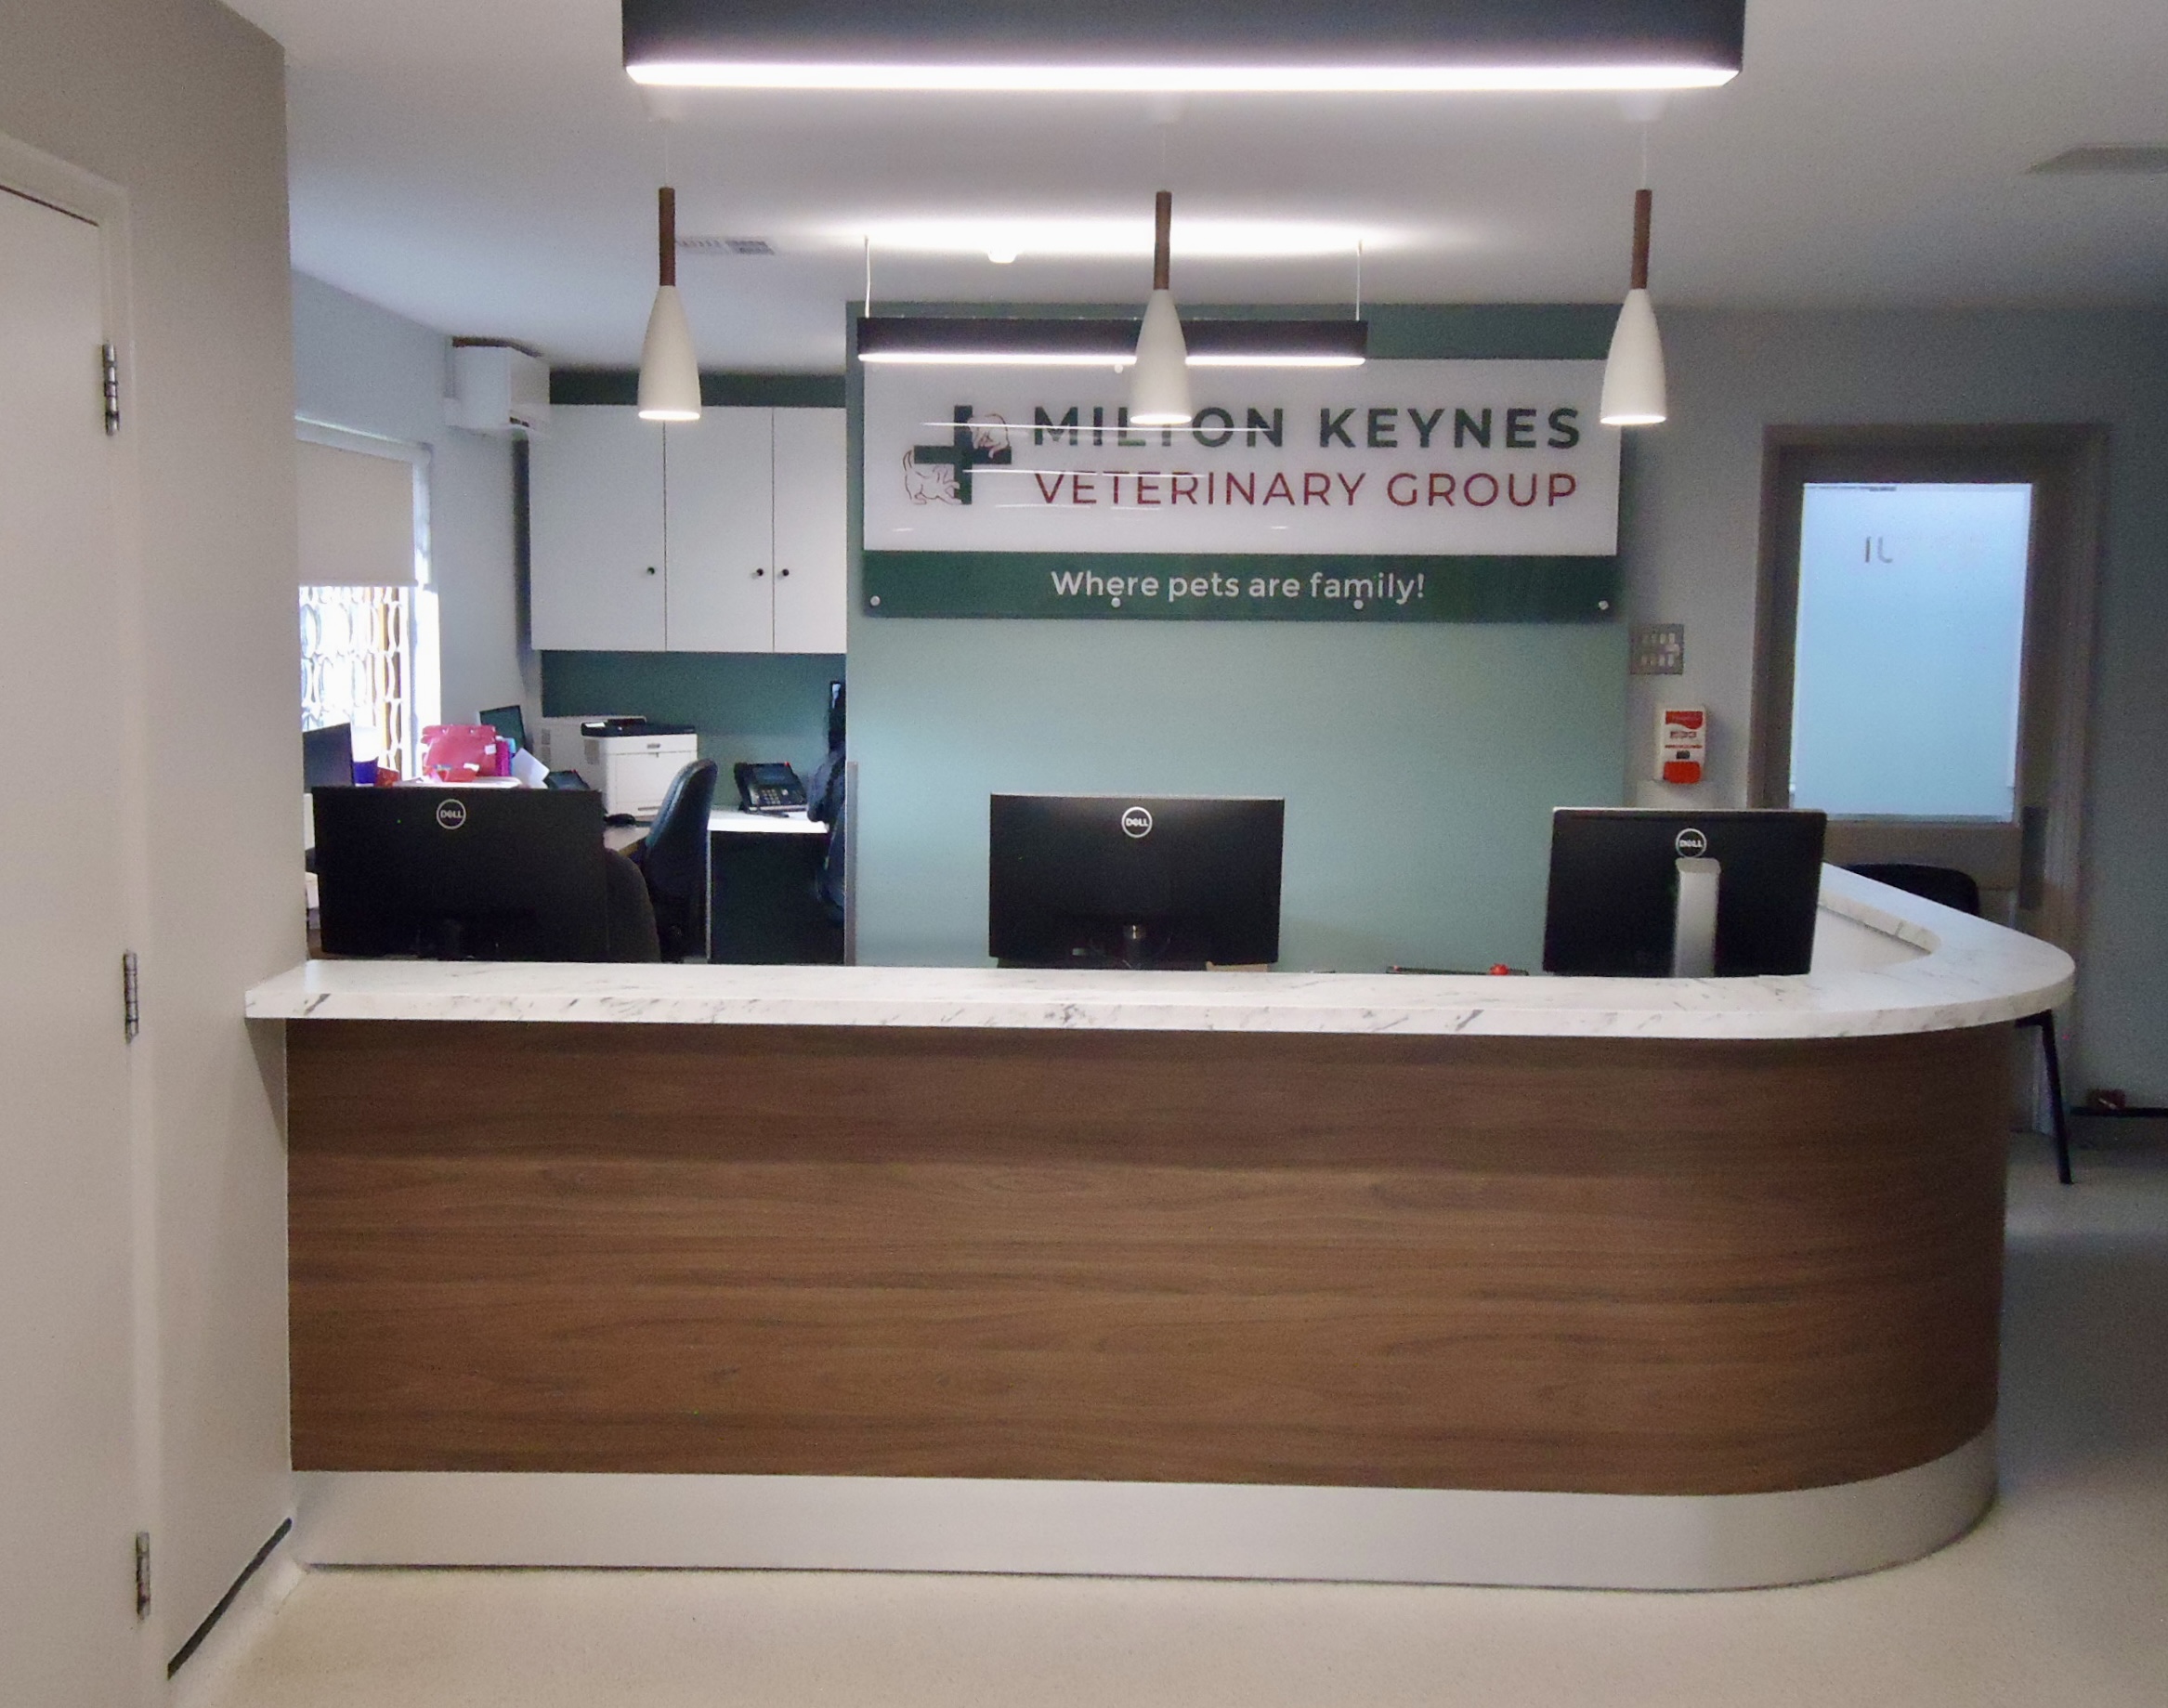 Milton Keynes Vets Reception area and desk